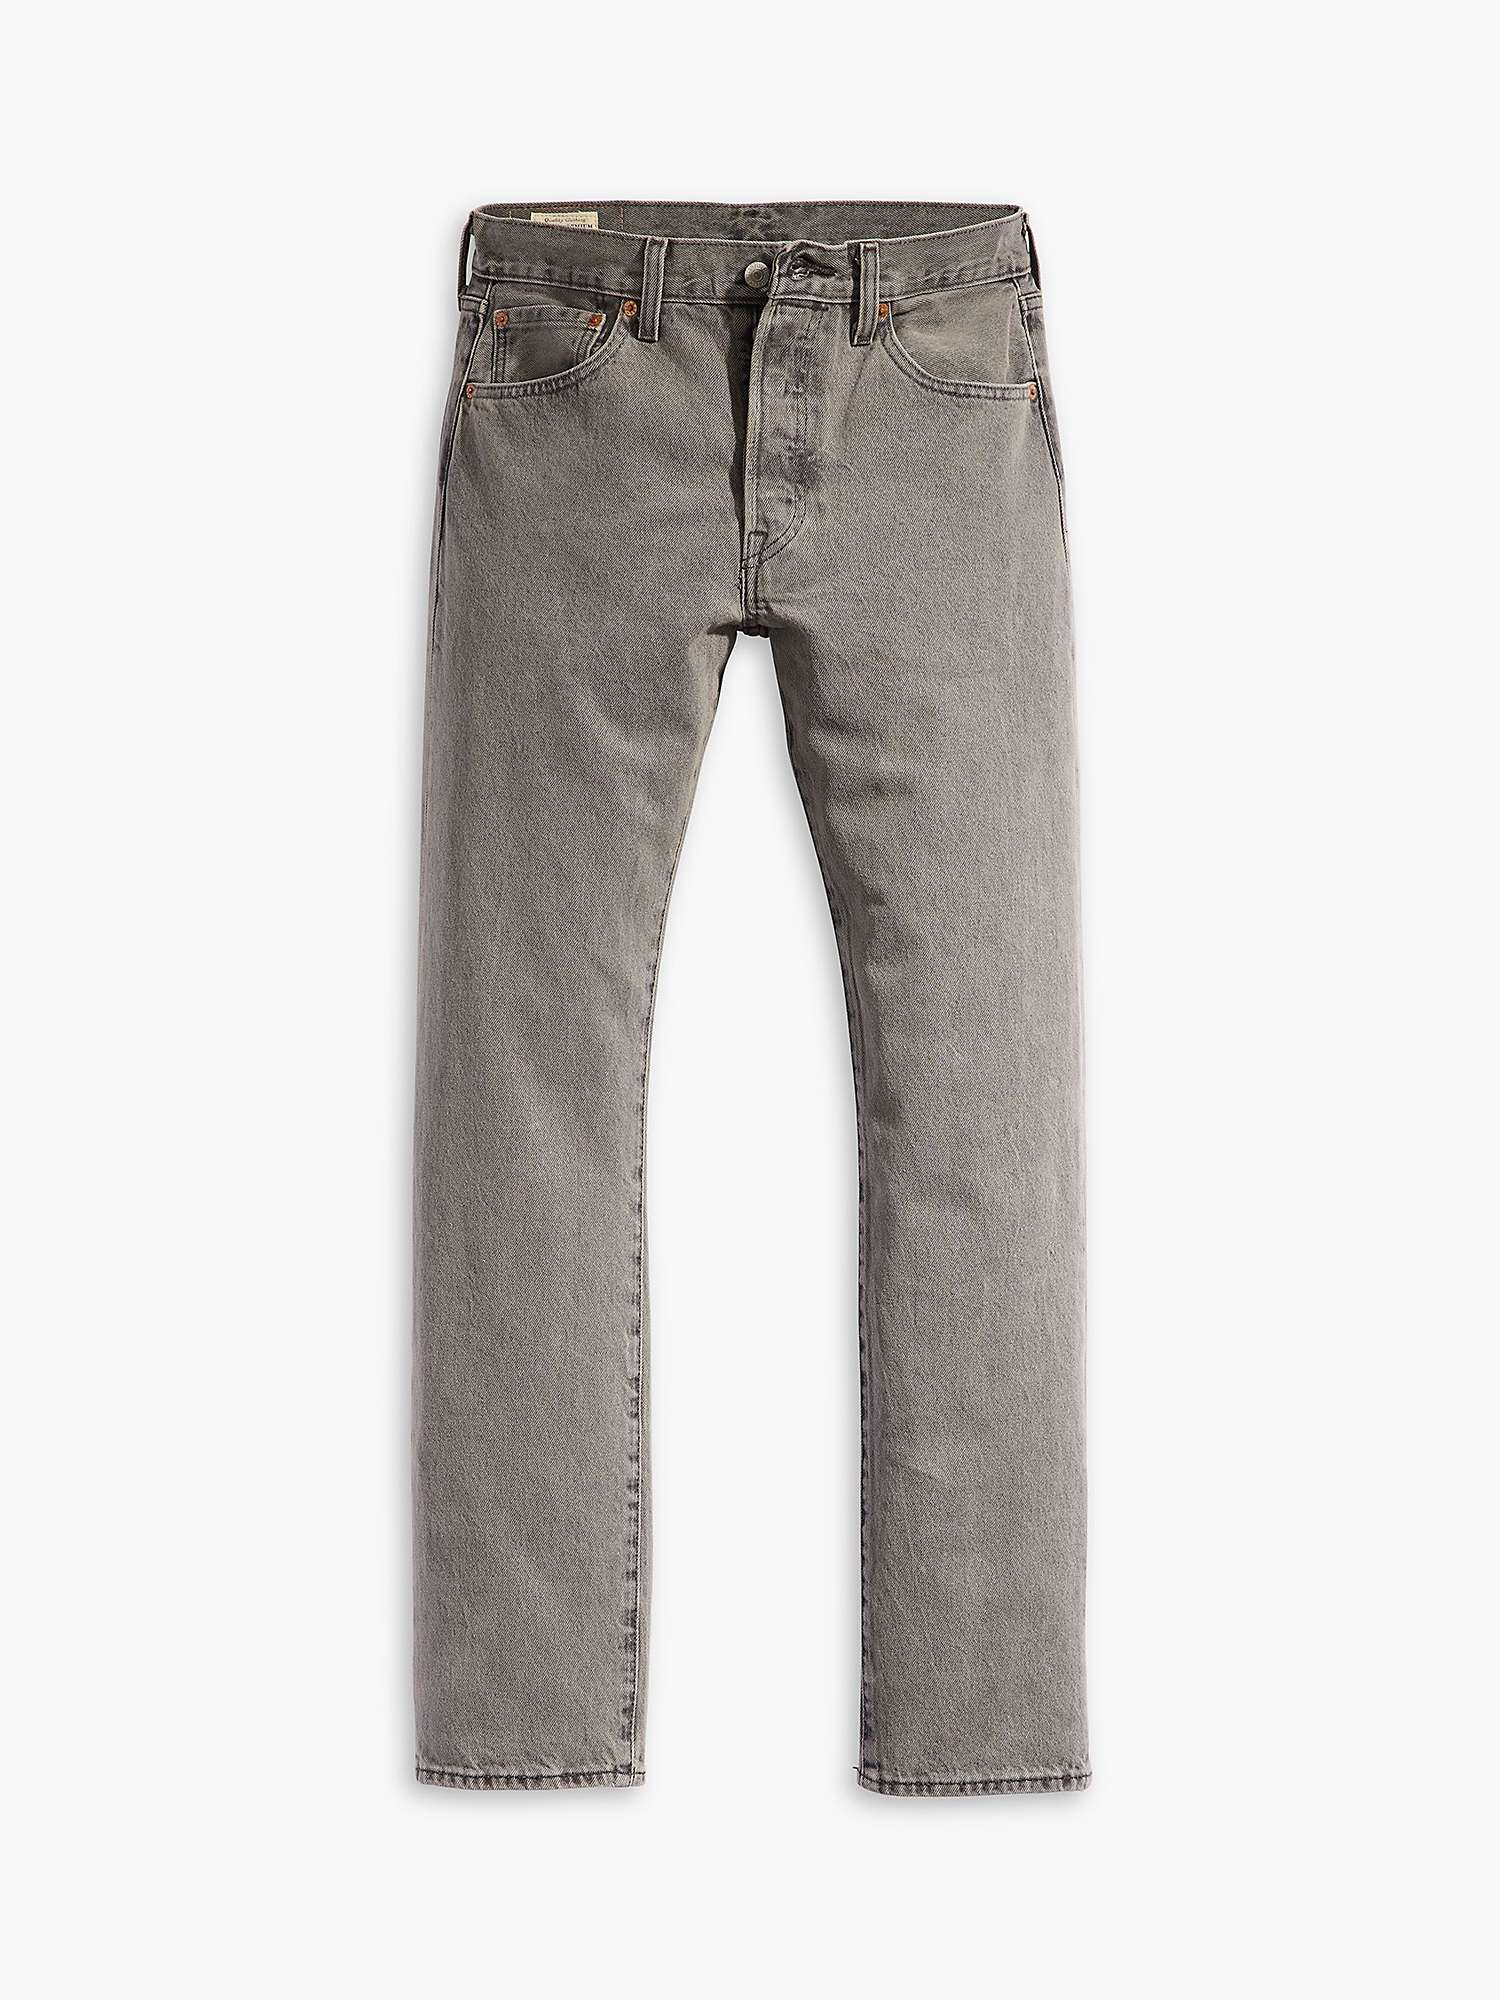 Buy Levi's 501 Original Classic Straight Leg Jeans Online at johnlewis.com